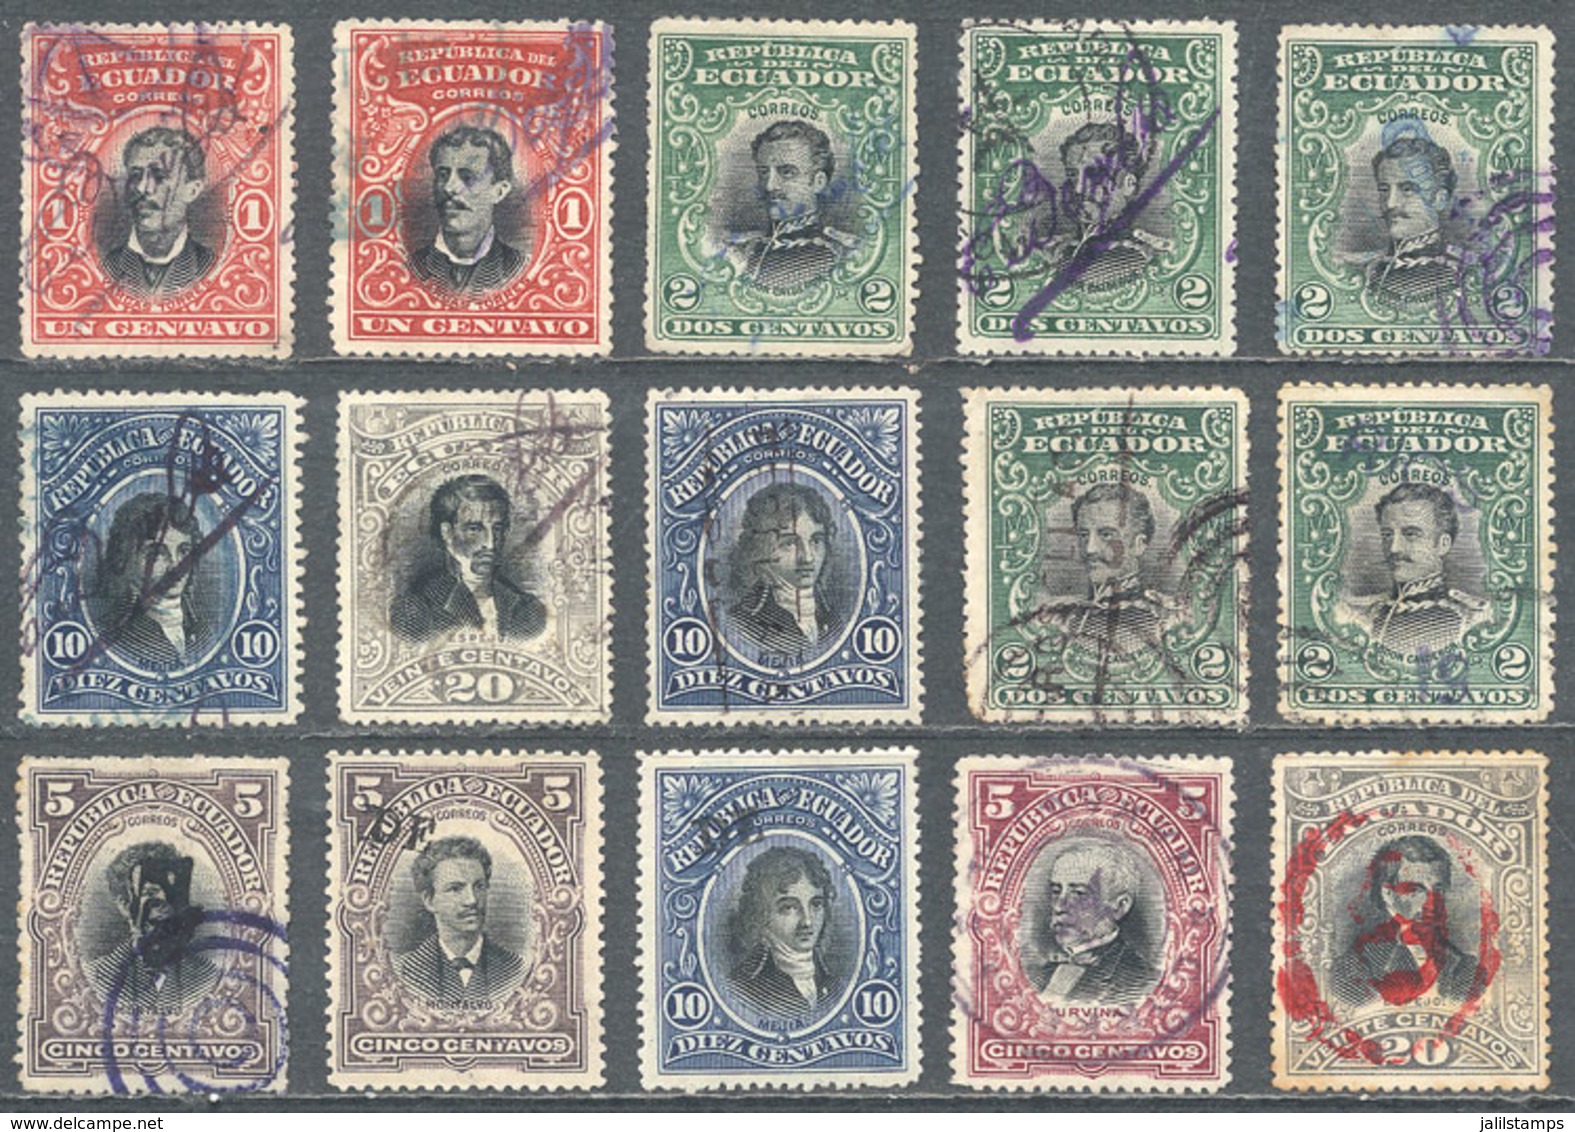 ECUADOR: Lot Of Stamps With Control Overprints Of 1902, Fine General Quality, Interesting! - Ecuador